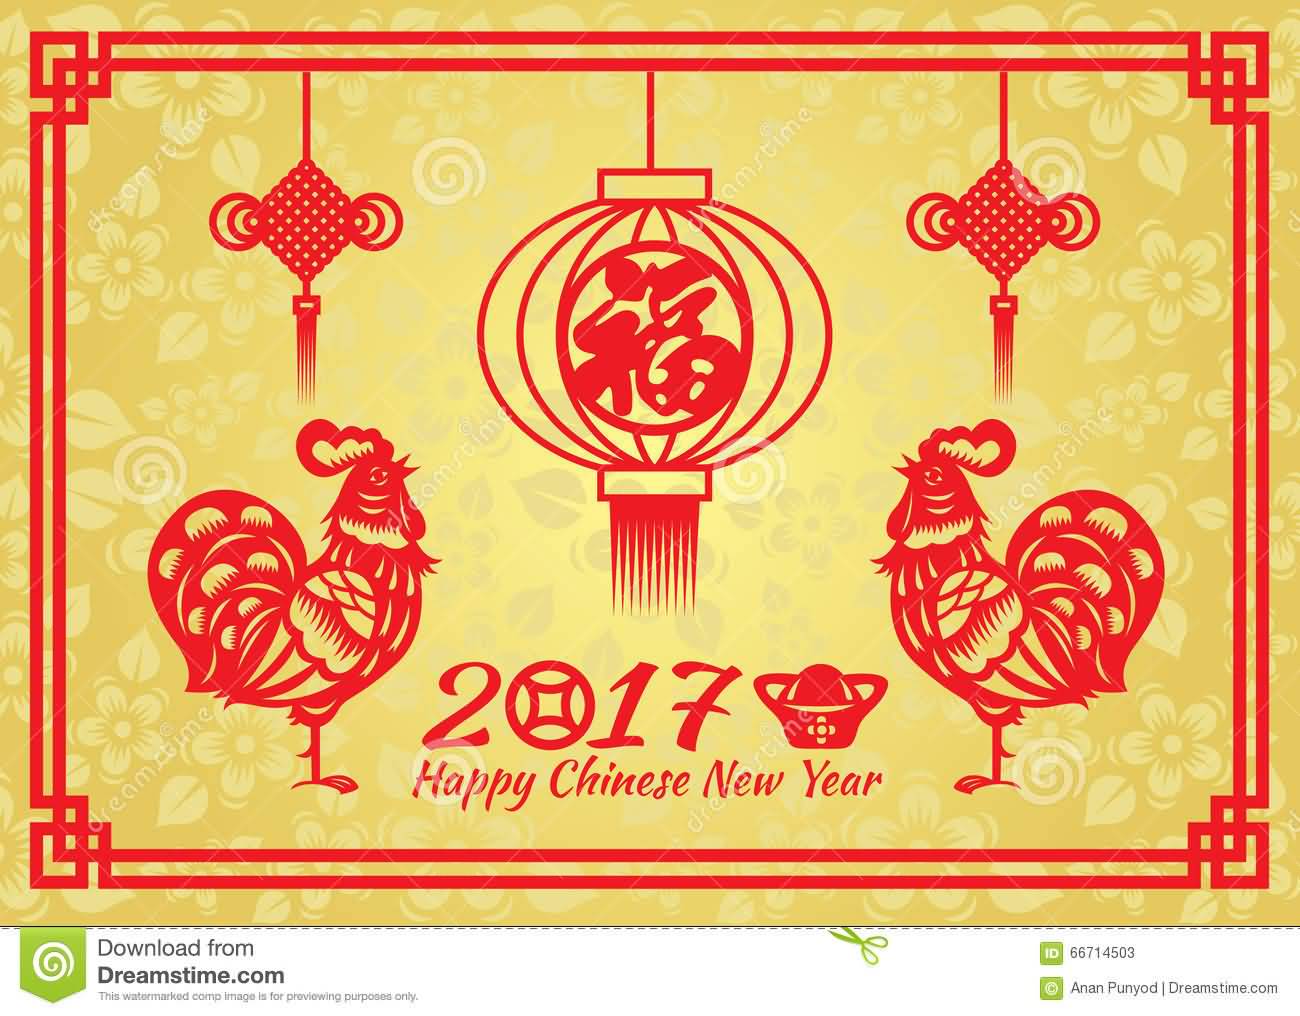 Happy Chinese New Year 2017